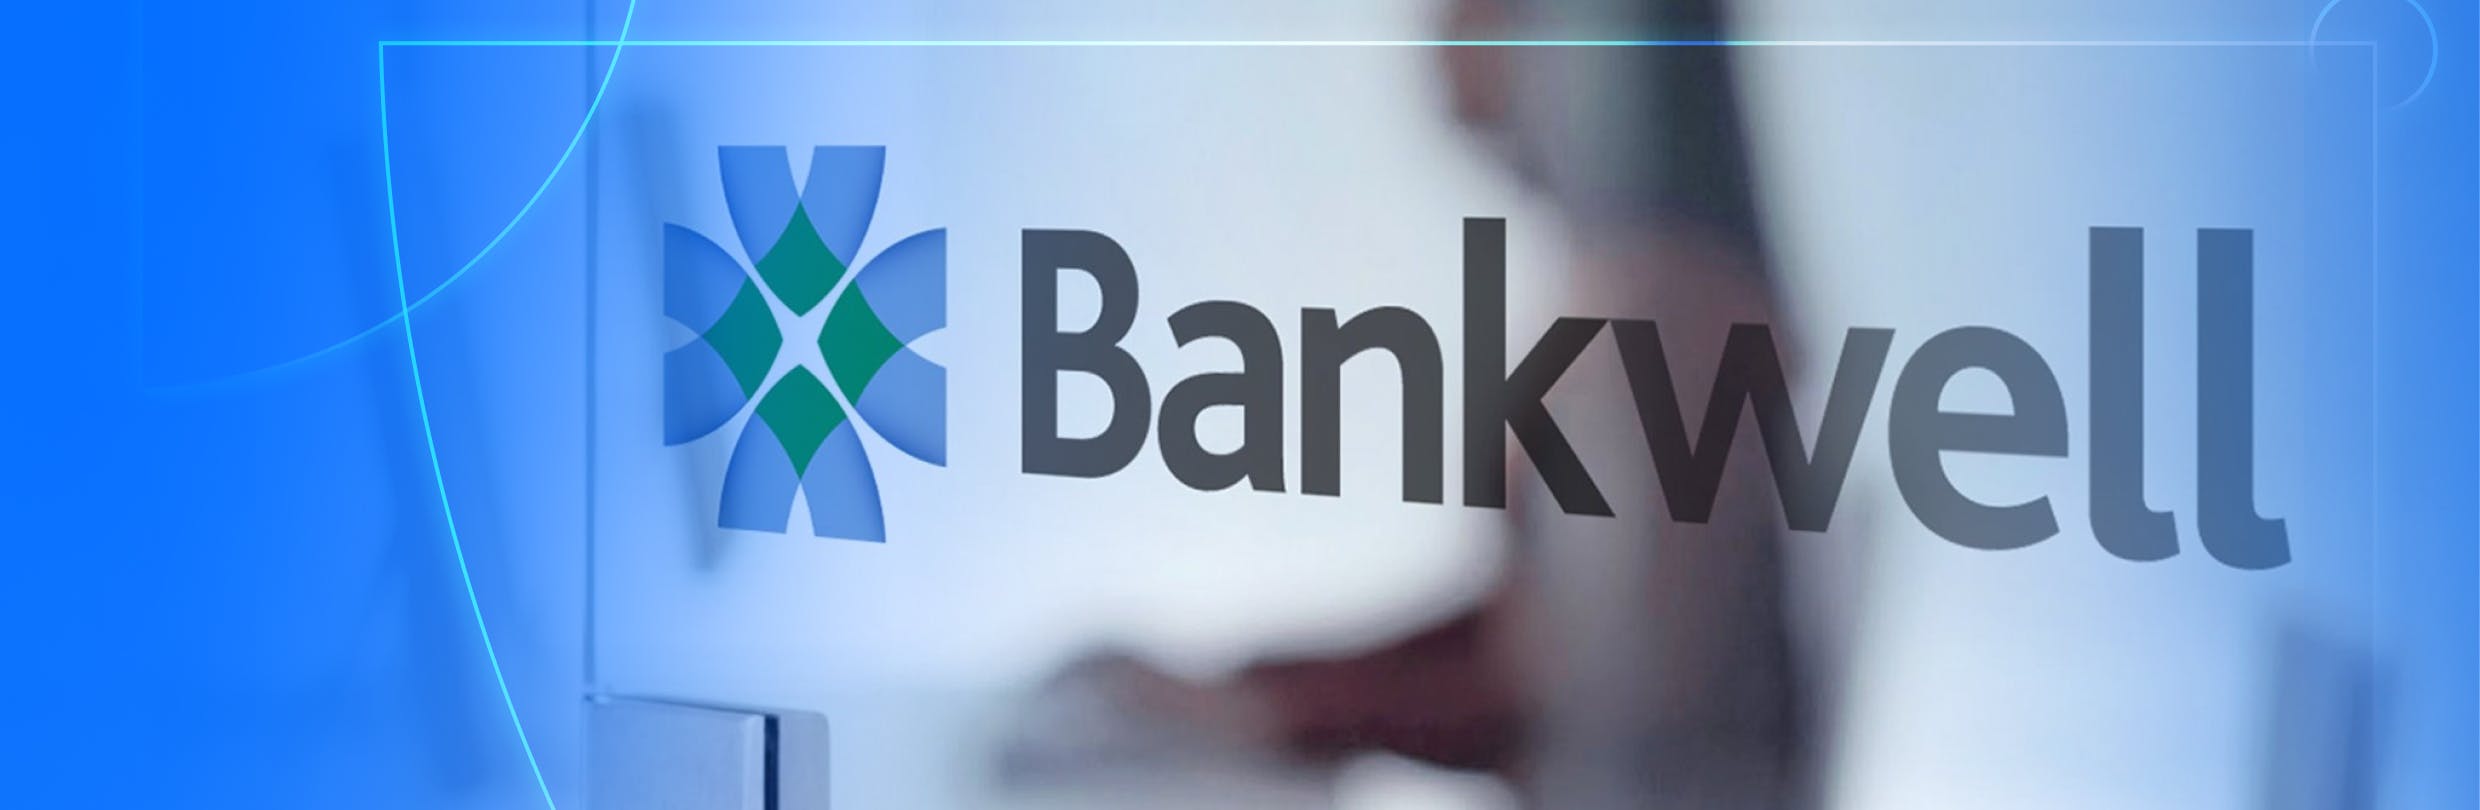 Bankwell logo